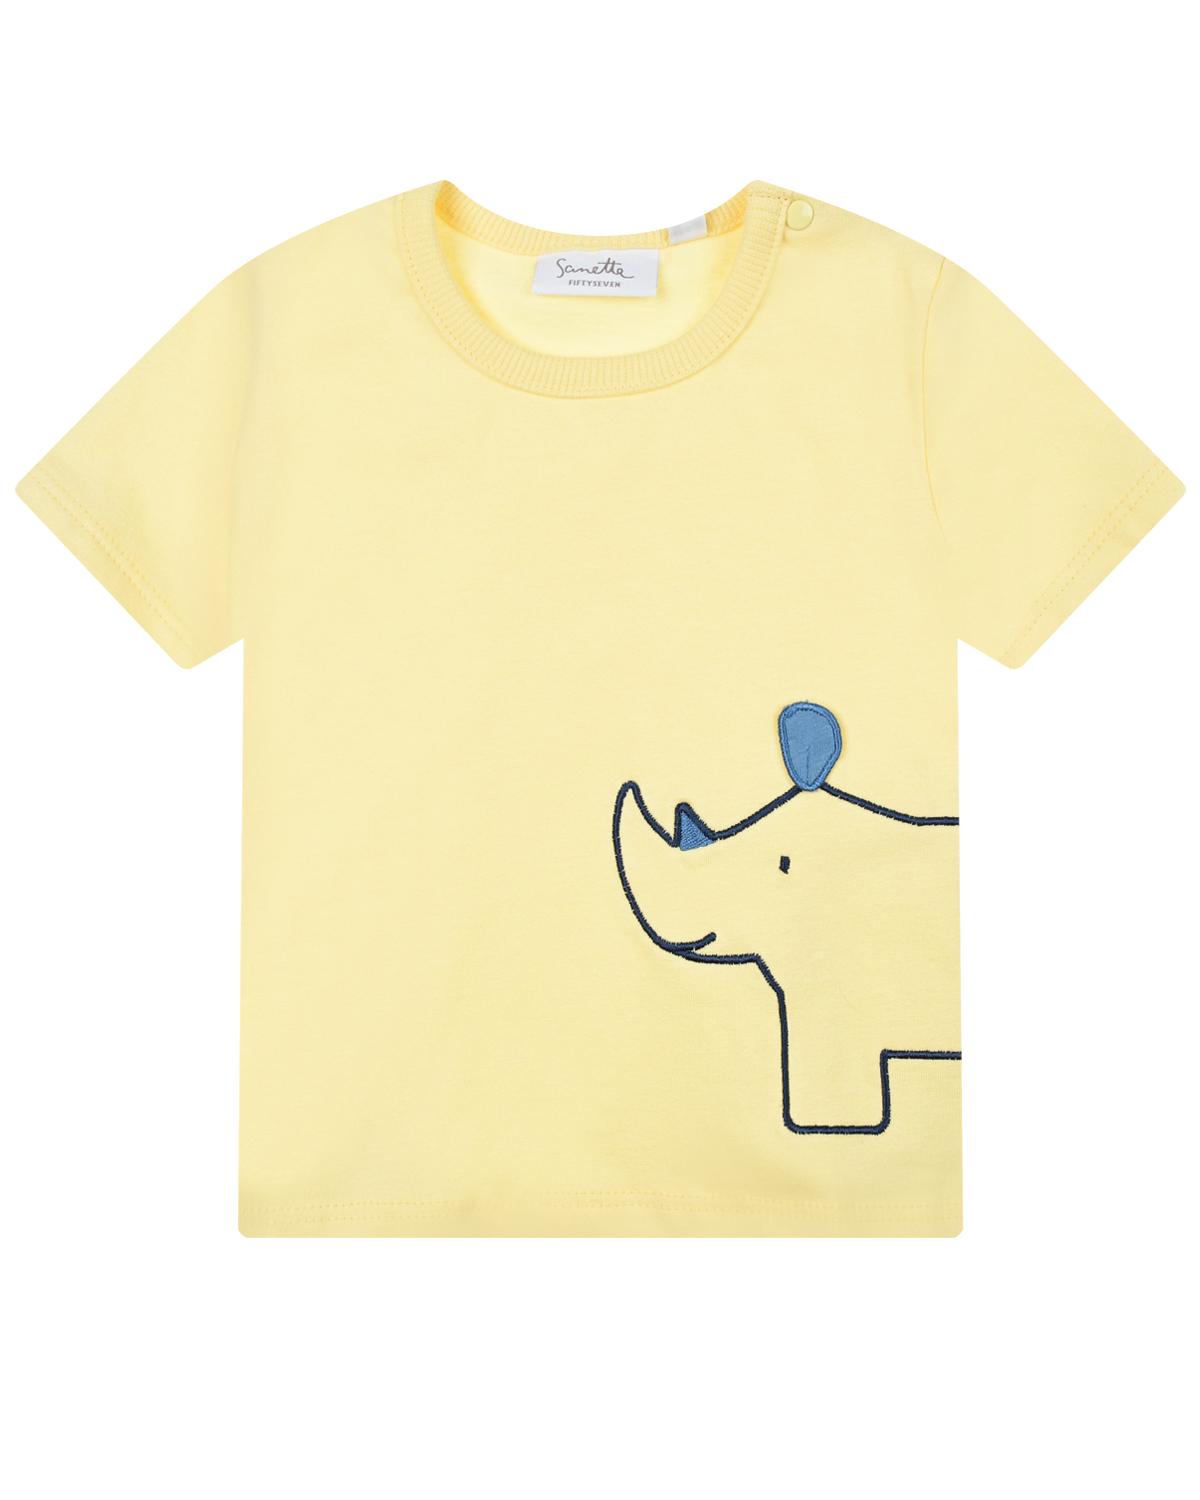 Желтая футболка с вышивкой "носорог" Sanetta fiftyseven, размер 74, цвет желтый - фото 1